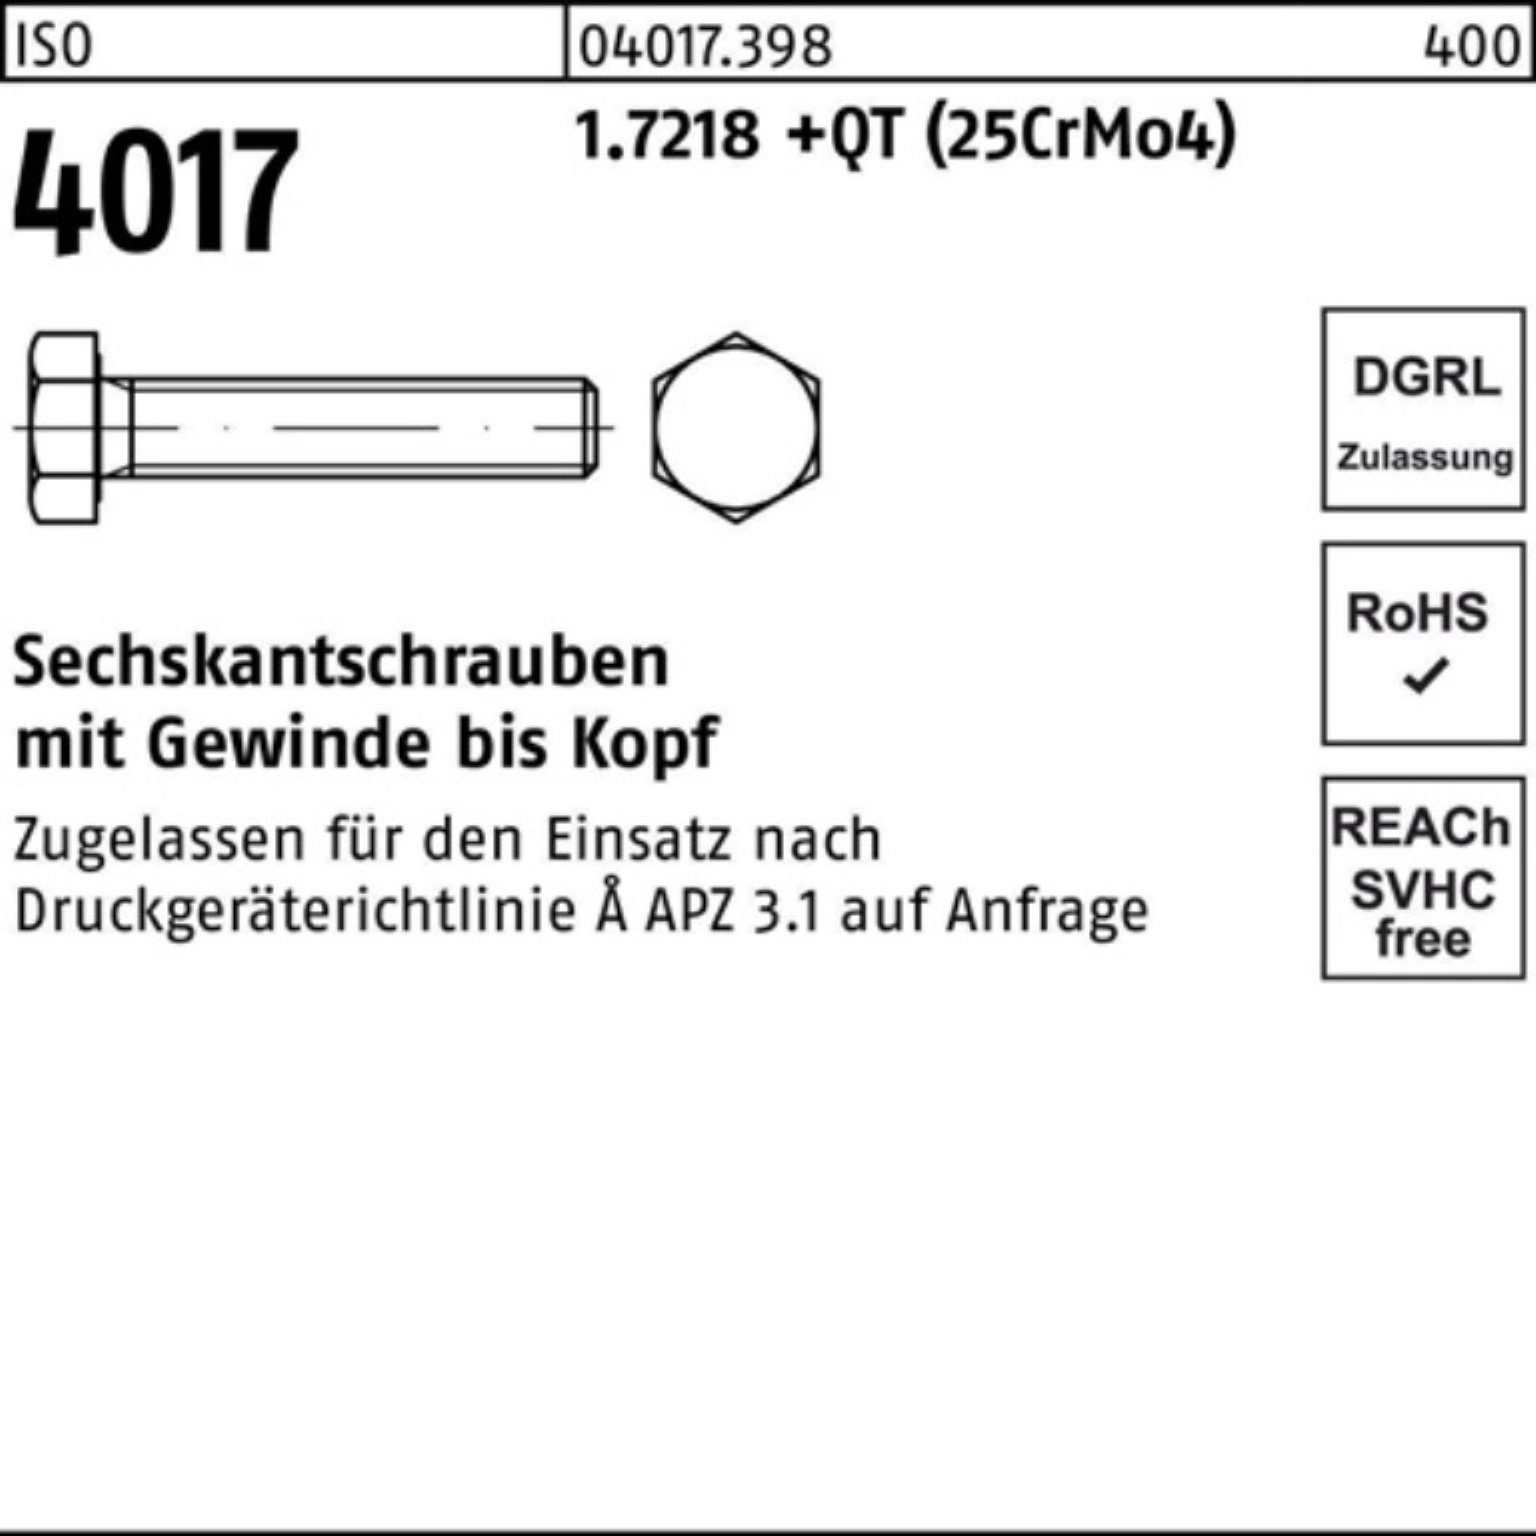 ISO Sechskantschraube VG Sechskantschraube 4017 M16x Pack (25CrMo4) +QT 1.7218 100er Bufab 70